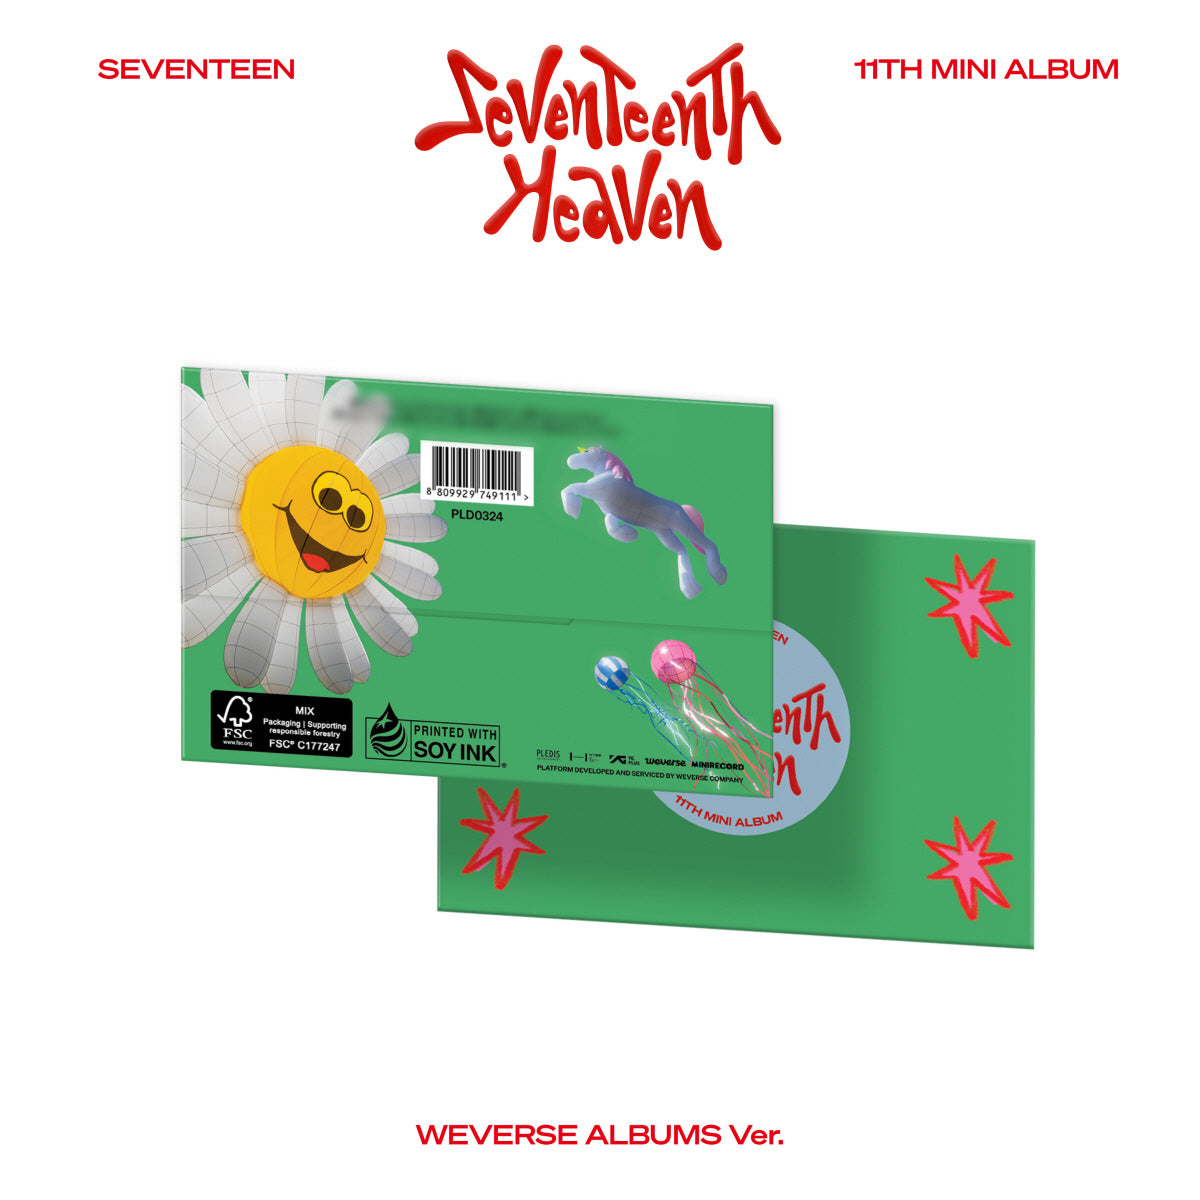 Seventeen 세븐틴 - 11th Mini-Album 'Seventeenth Heaven' (Weverse Albums Version) + Soundwave POB